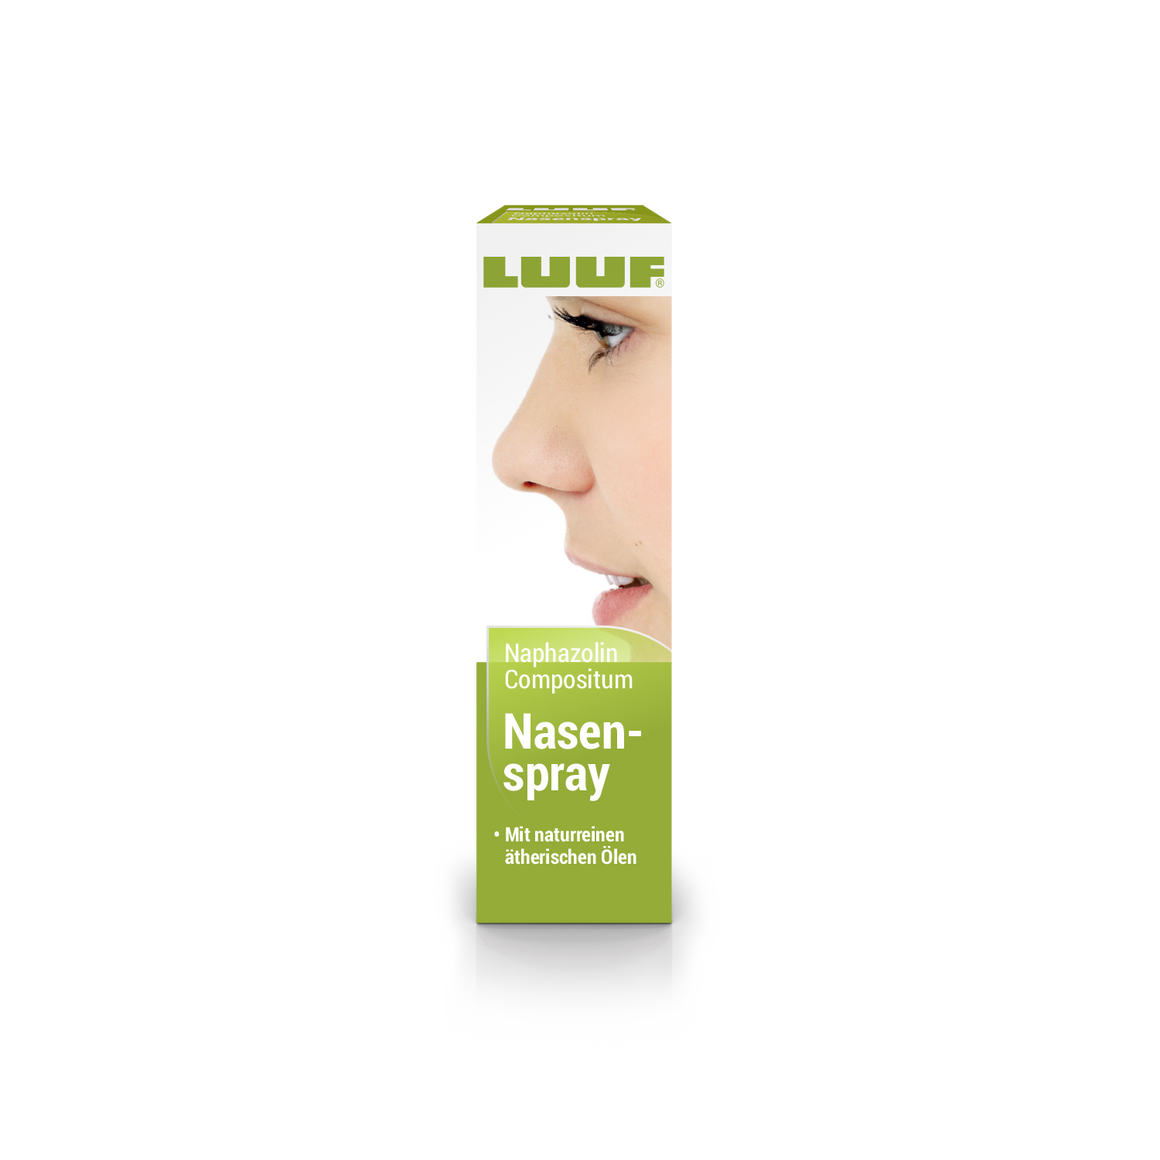 LUUF® Naphazolin compositum Nasenspray